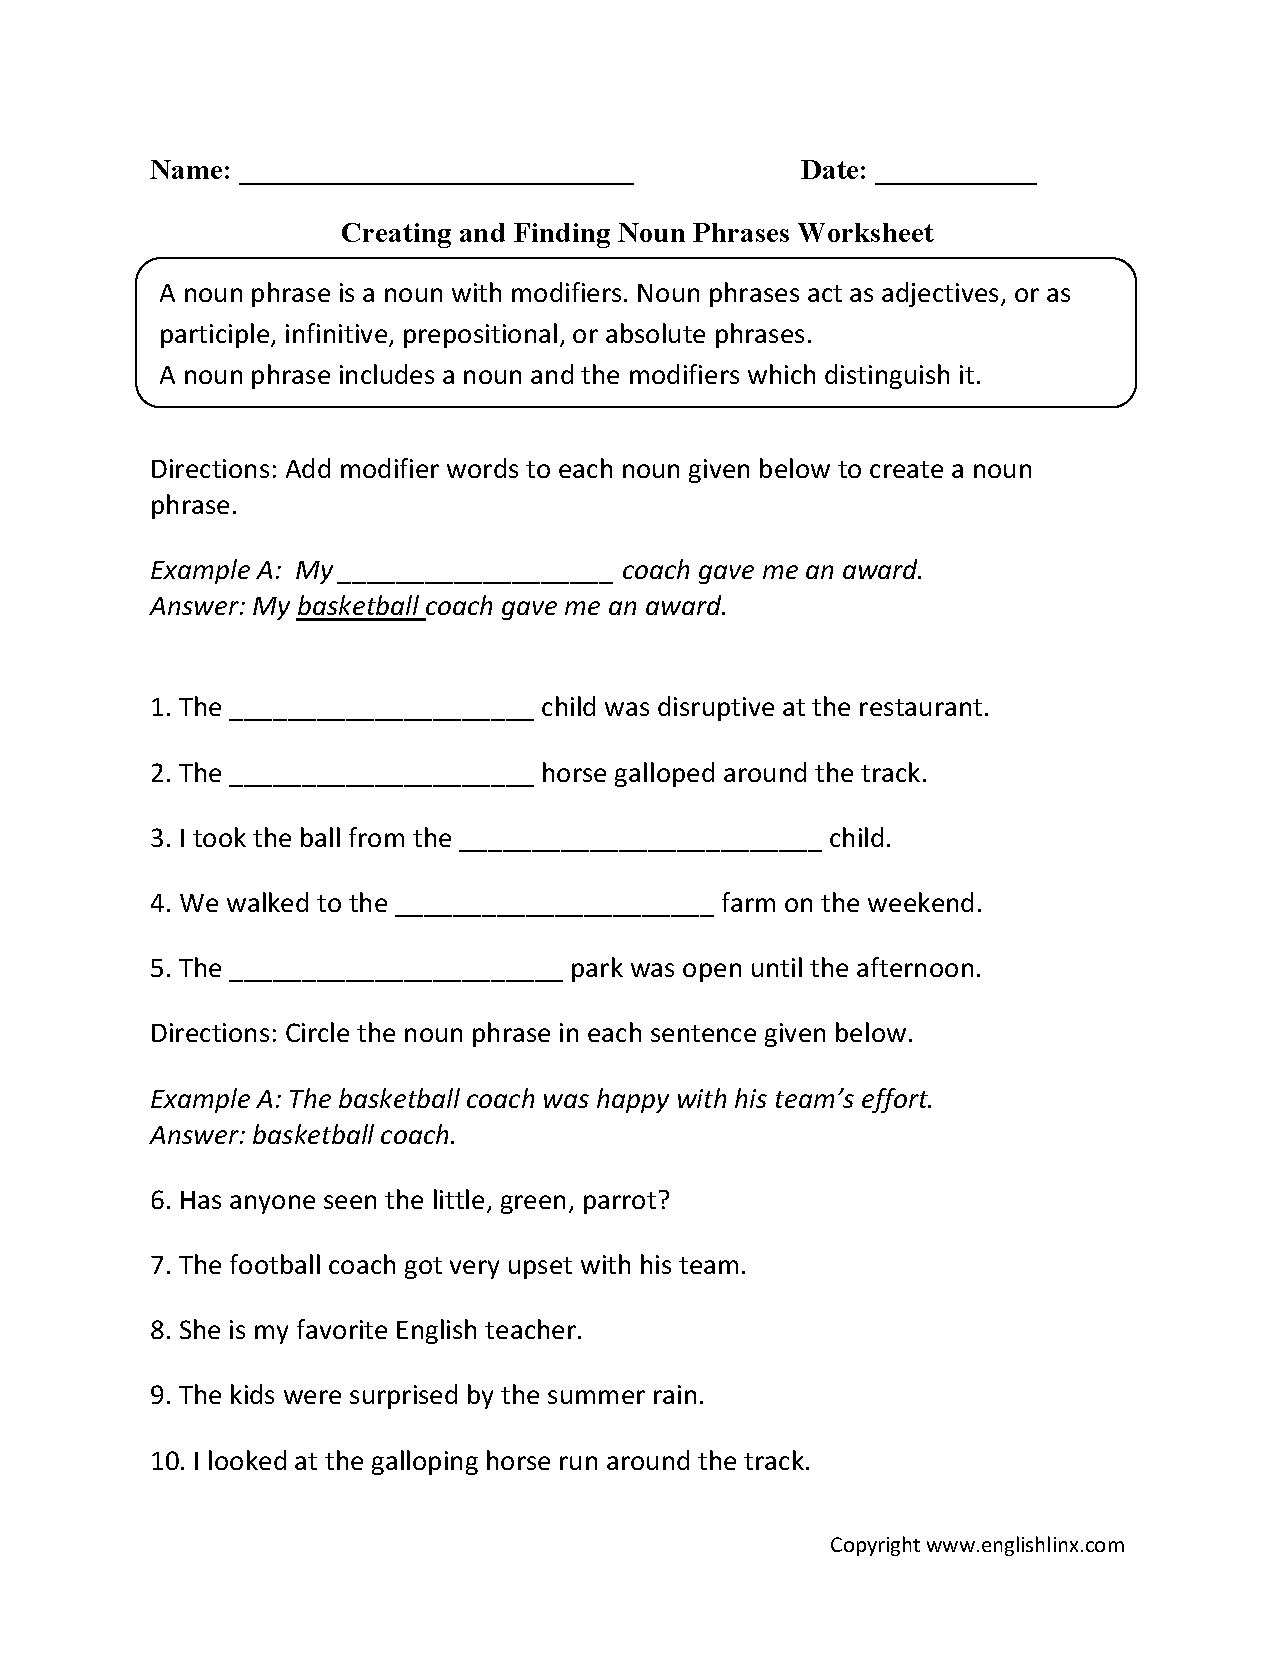 nouns-worksheets-noun-phrases-worksheets